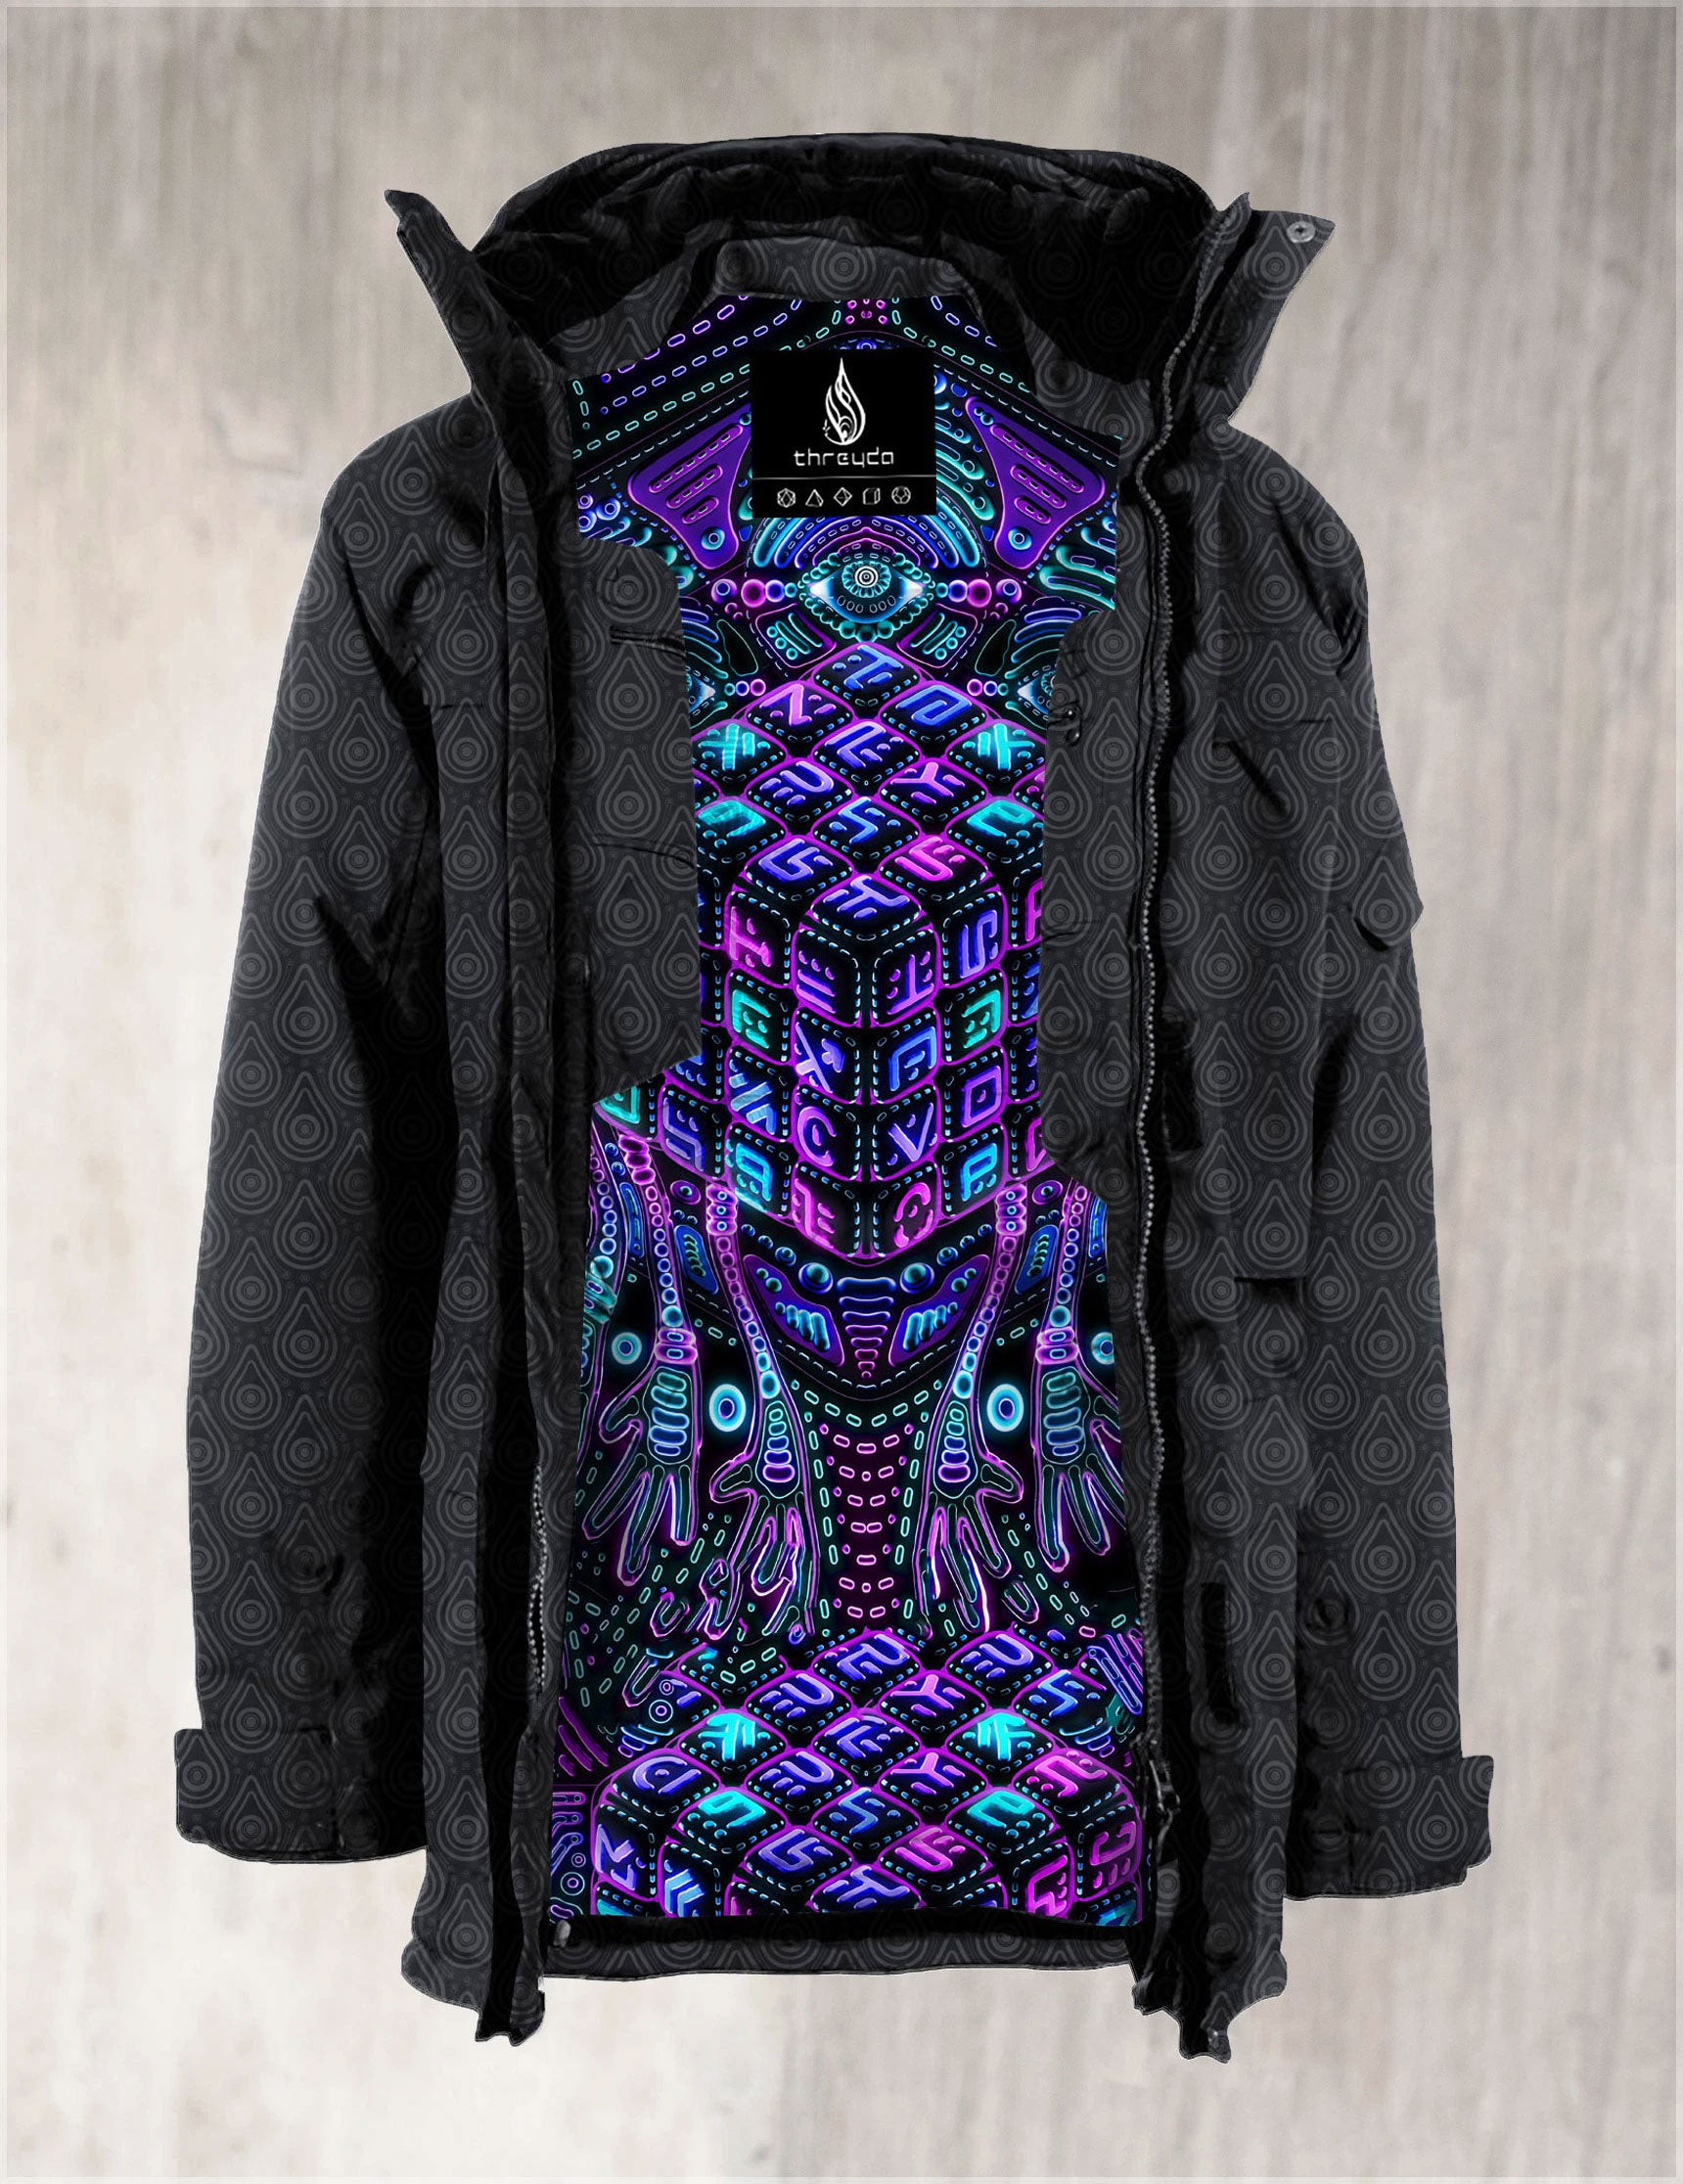 Gift Onyx Jacket by Ben Ridgway